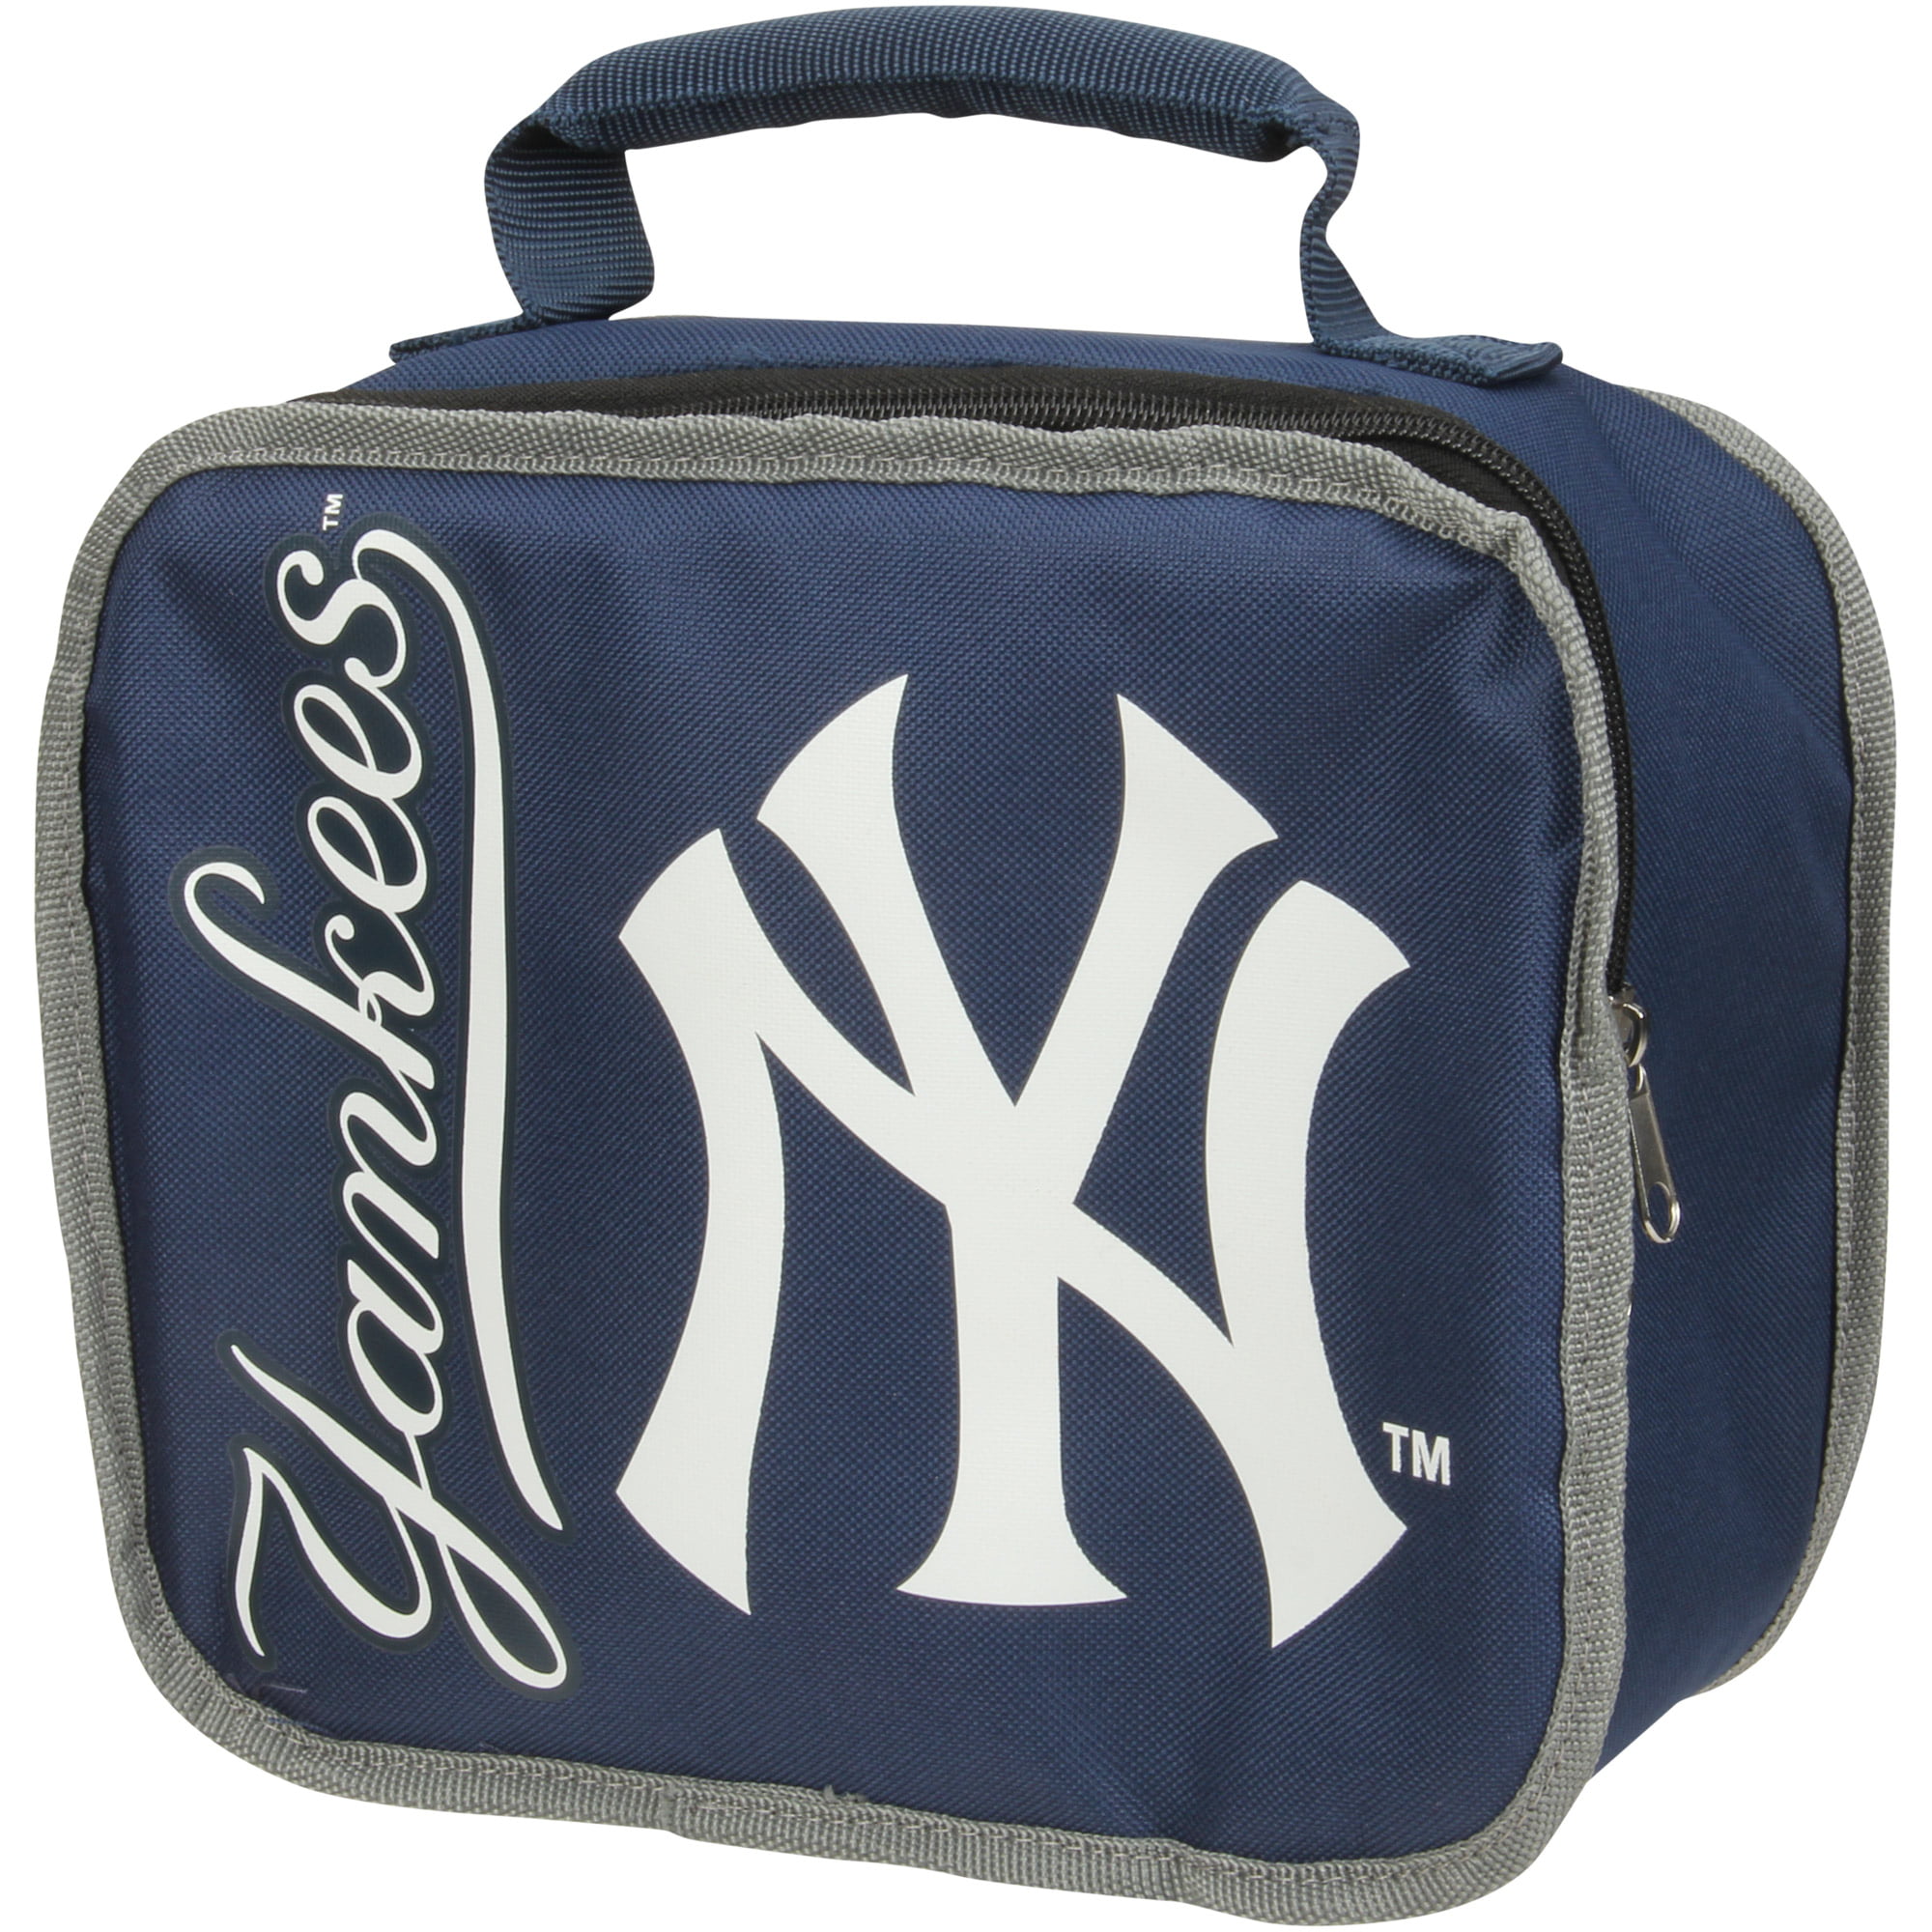 MLB New York Yankees Montero Cooler Tote Bag - Black